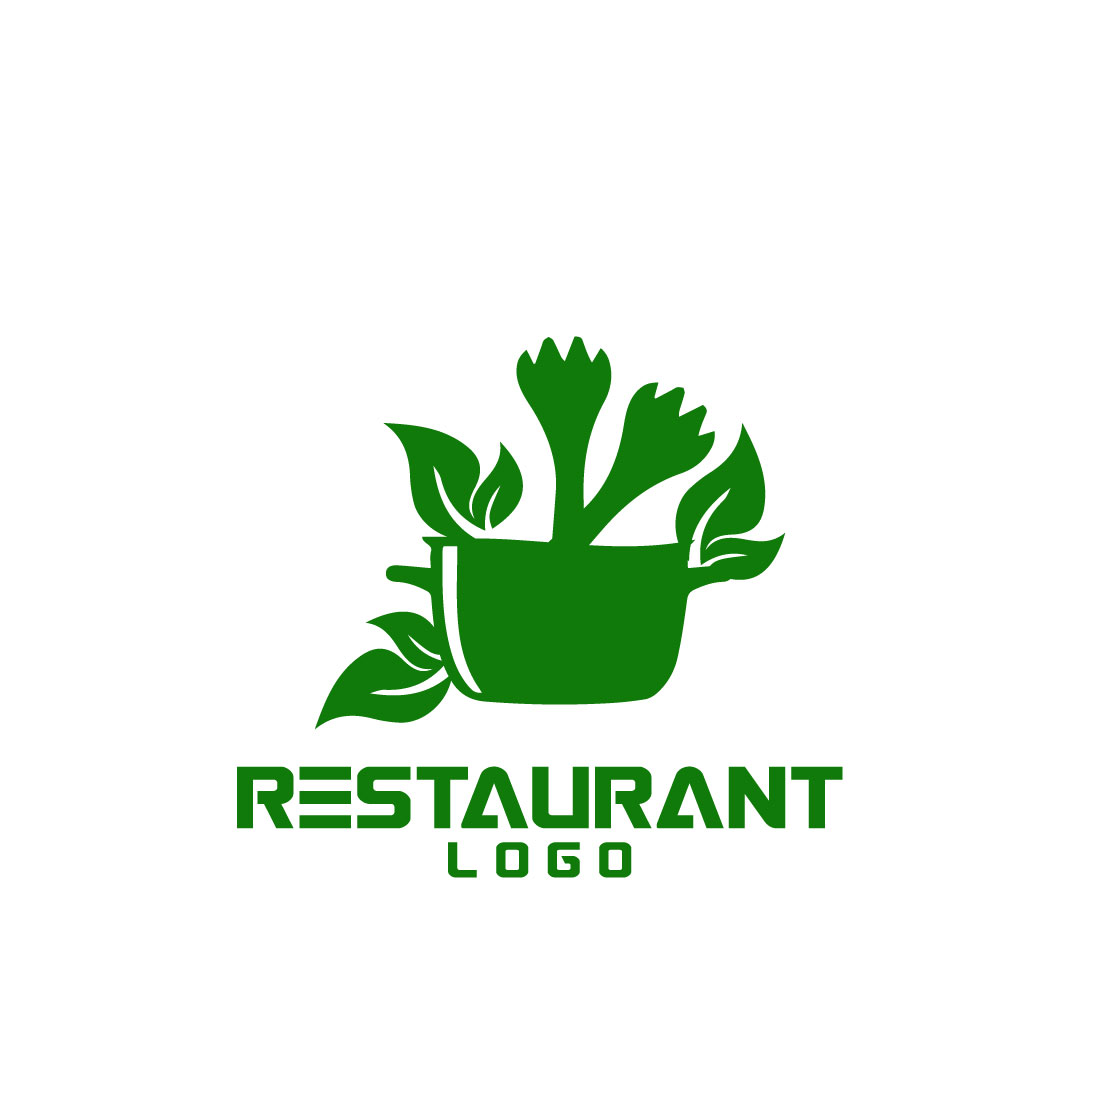 Free wok Logo cover image.